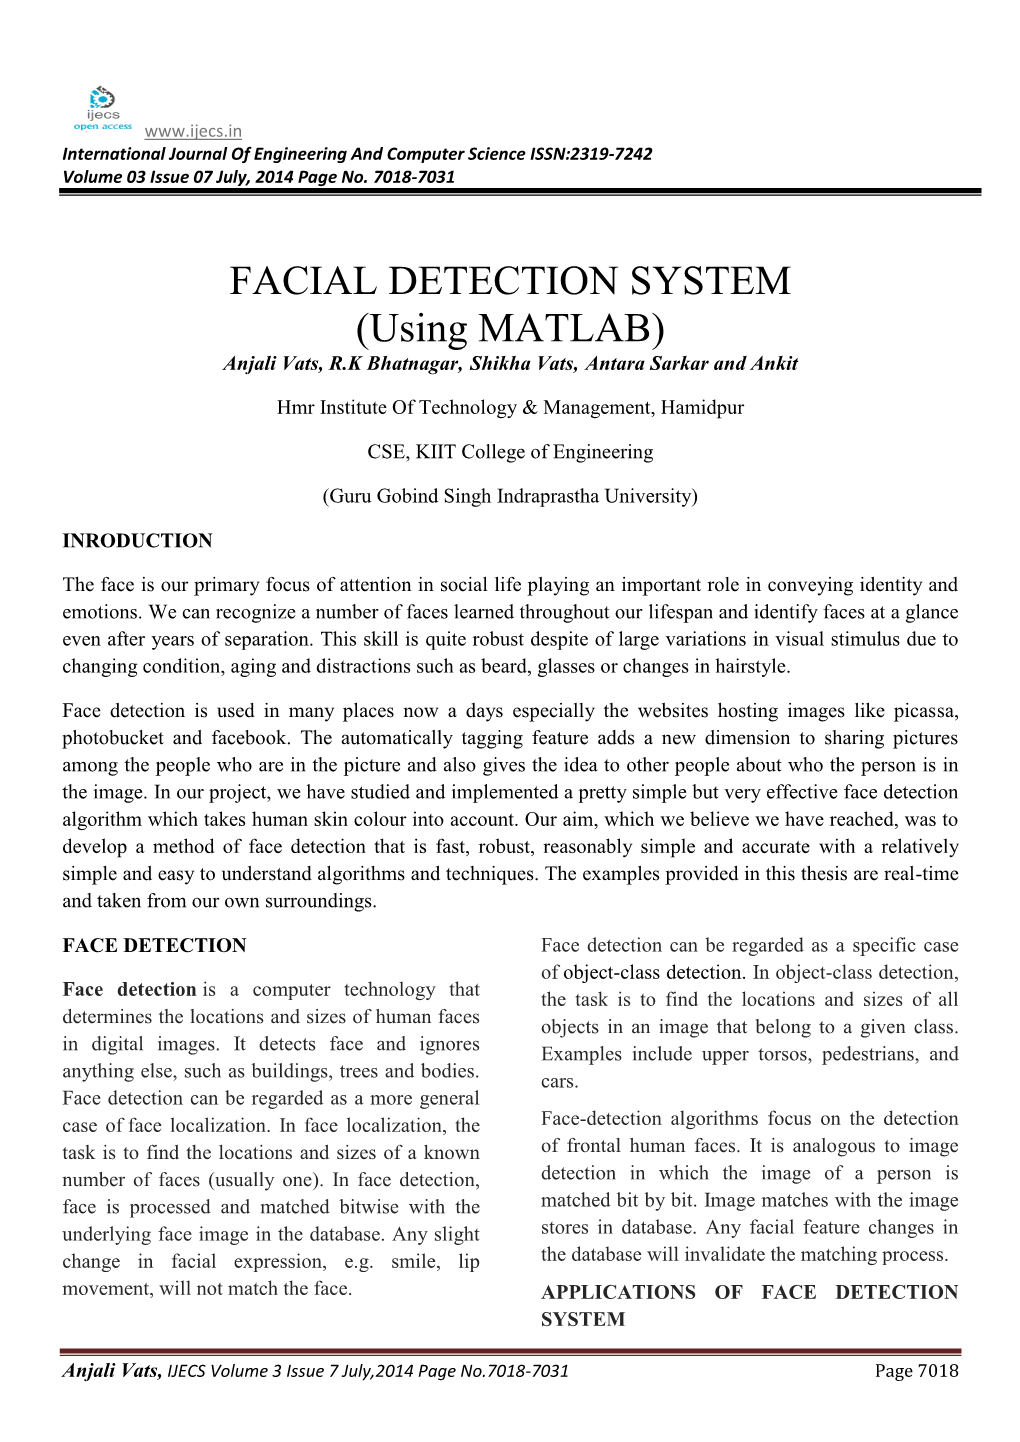 FACIAL DETECTION SYSTEM (Using MATLAB) Anjali Vats, R.K Bhatnagar, Shikha Vats, Antara Sarkar and Ankit